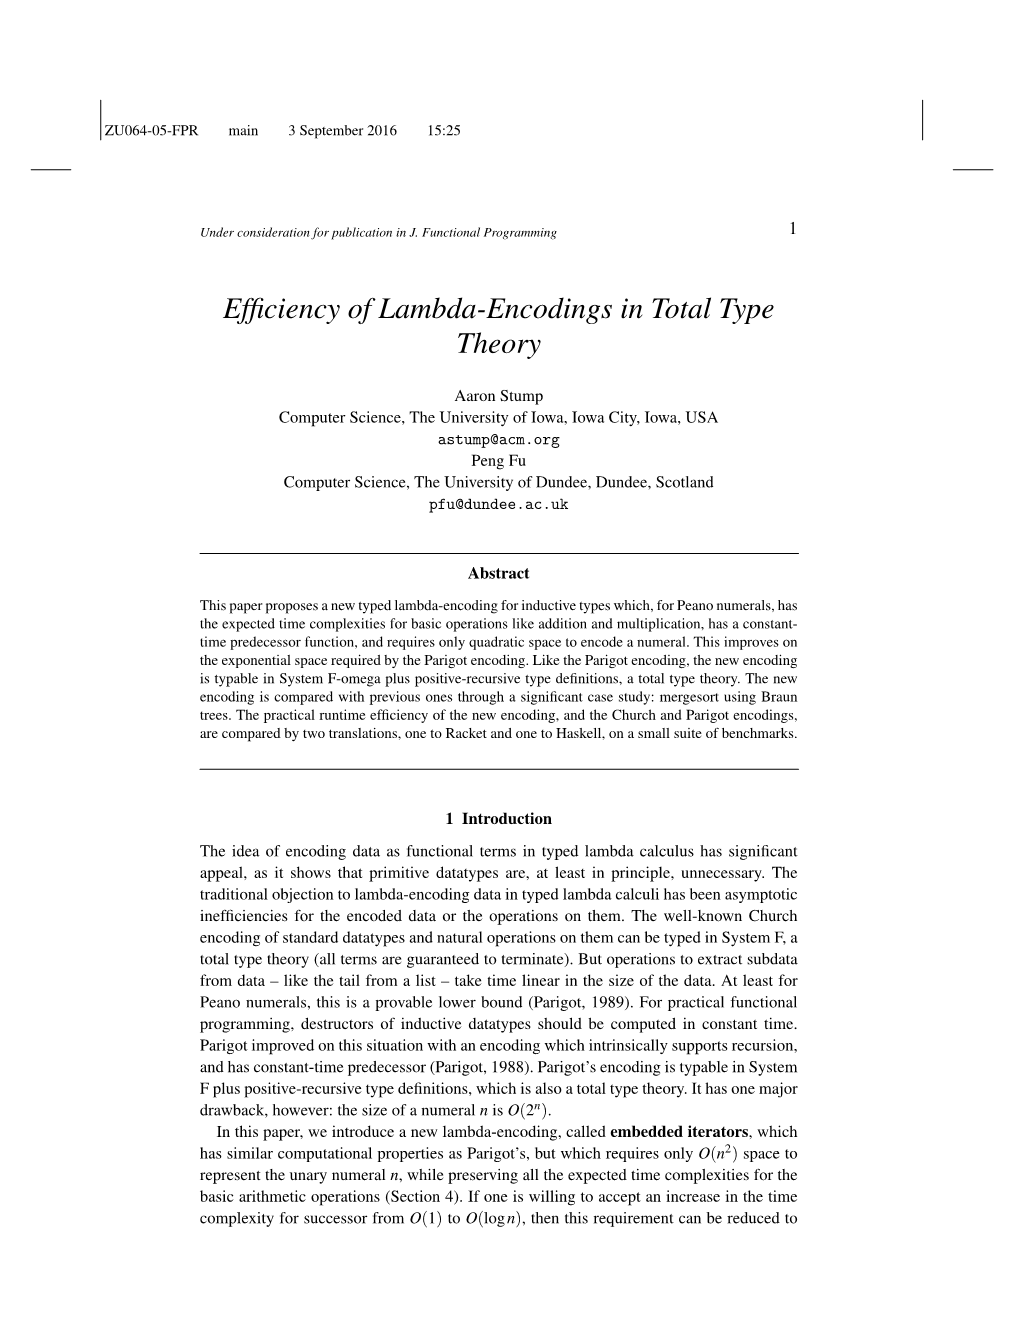 Efficiency of Lambda-Encodings in Total Type Theory